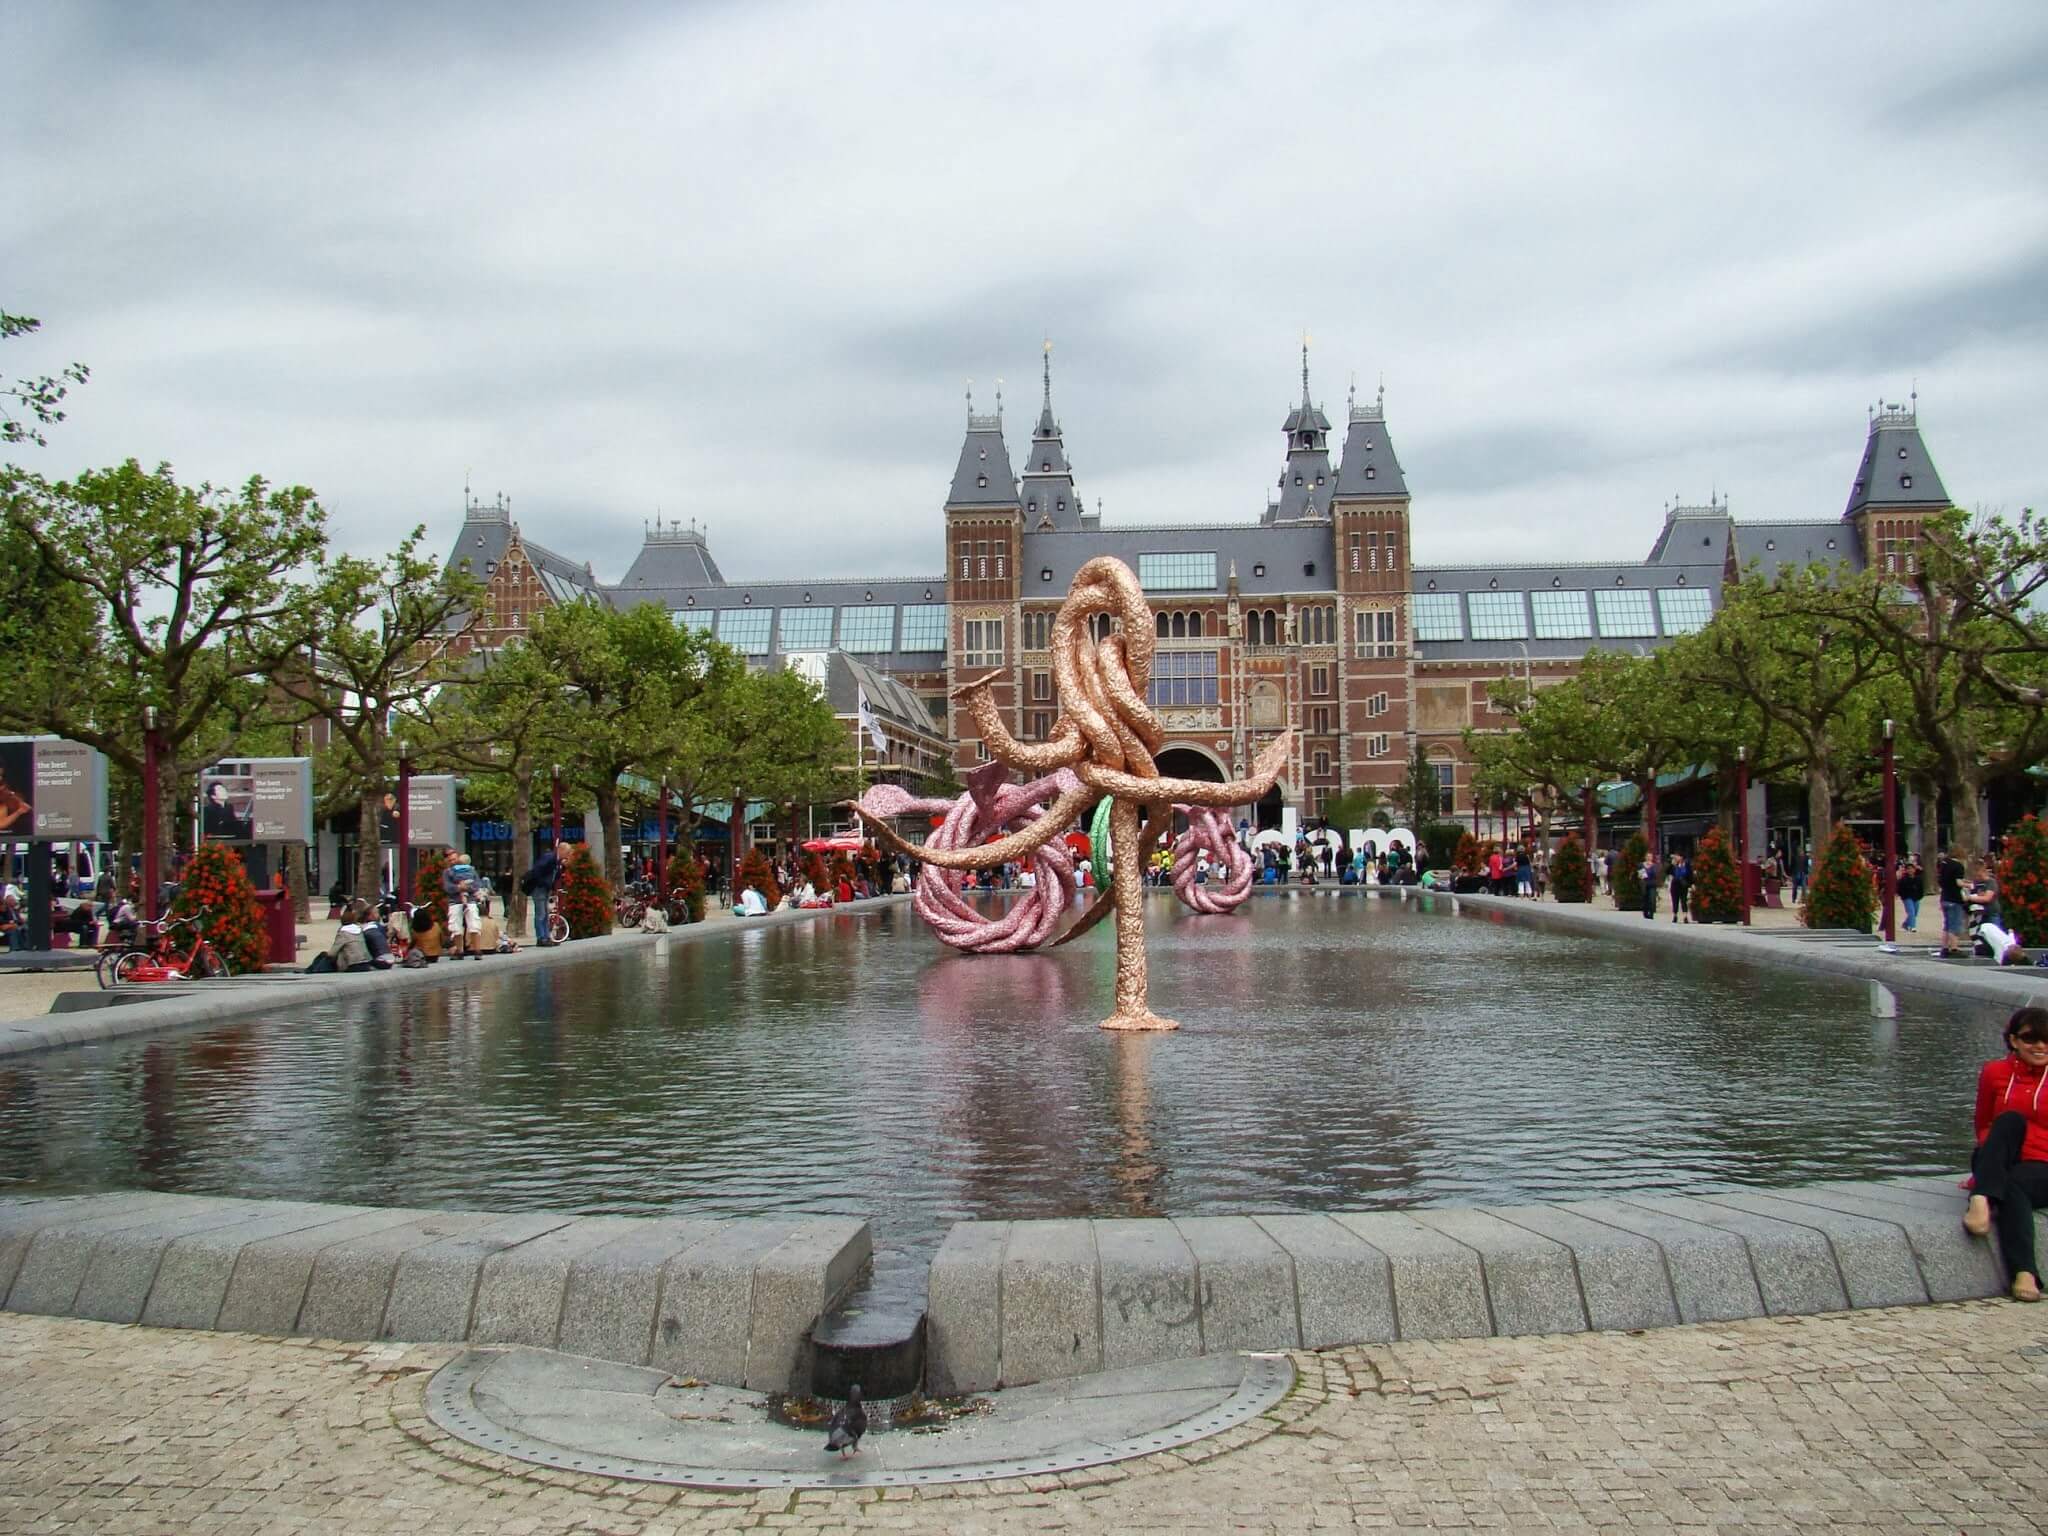 I love Amsterdam